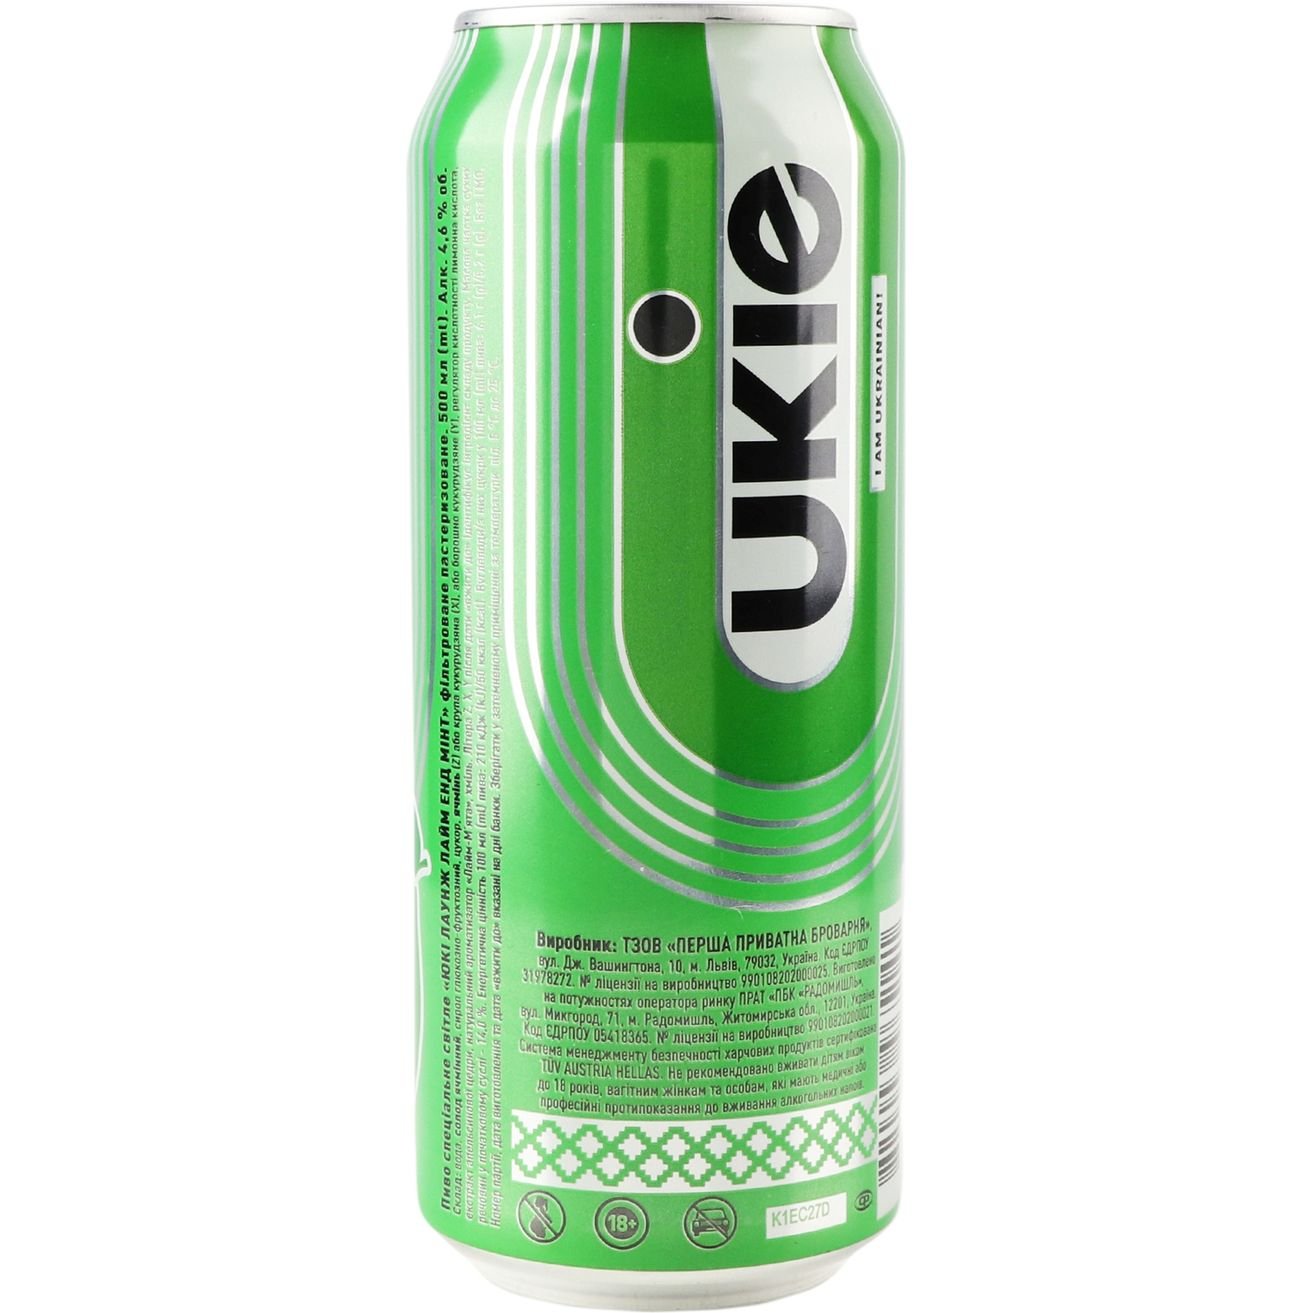 Пиво Ukie Lounge Lime&Mint, светлое, ж/б, 0,5 л - фото 2